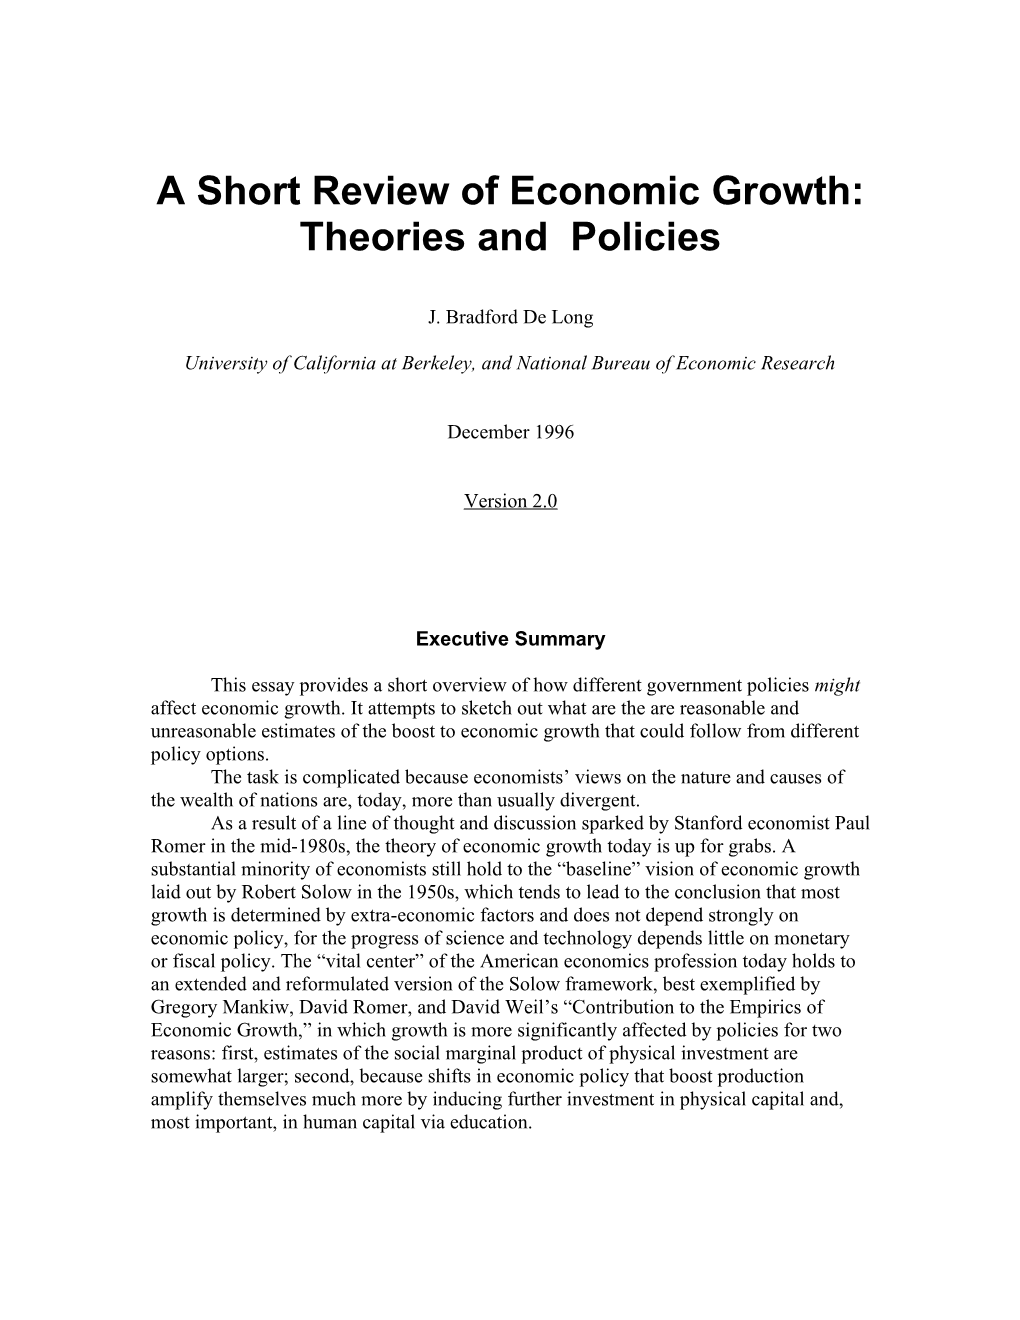 Improving Economic Growth